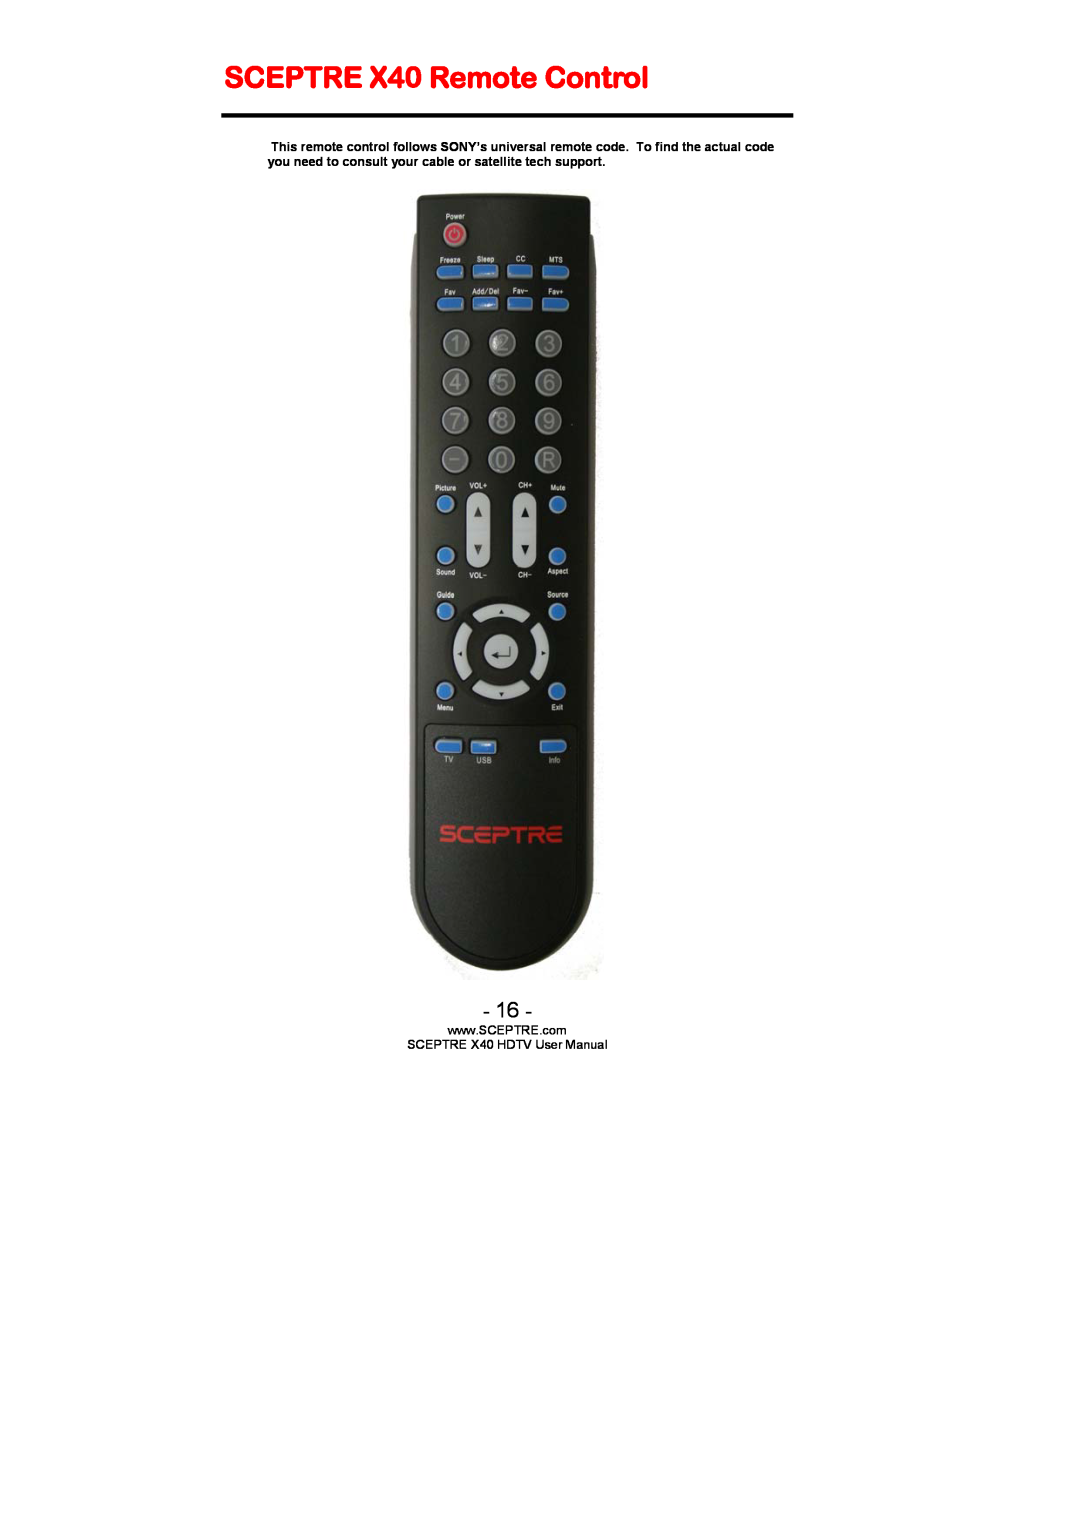 Sceptre Technologies SCEPTRE X40 HDTV user manual SCEPTRE X40 Remote Control 